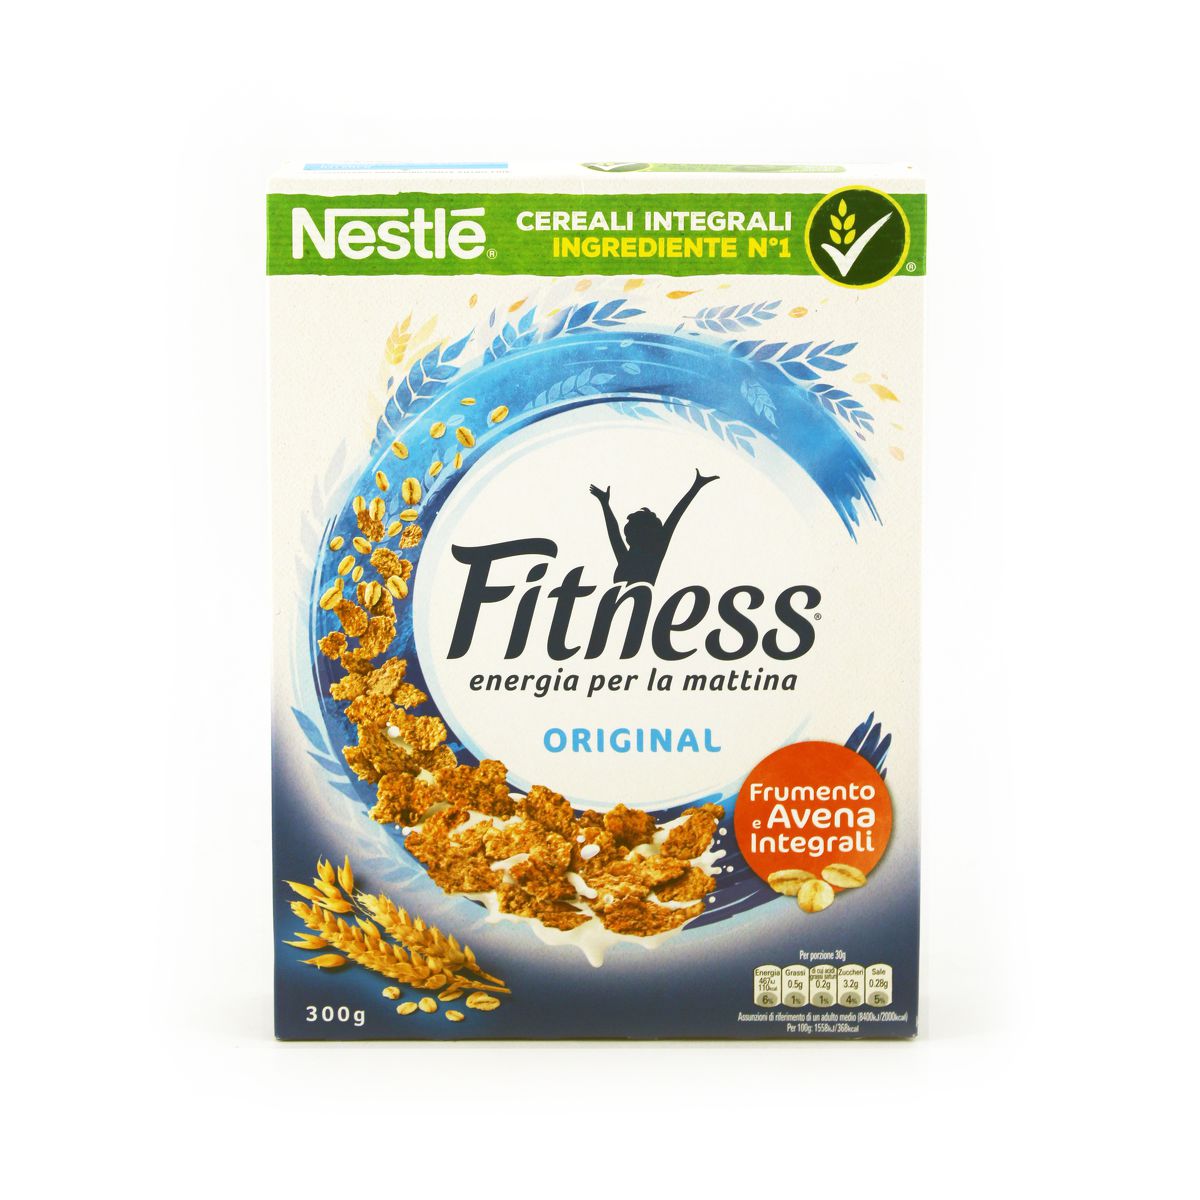 Nestlè Cereali Integrali Fitness Original 300g